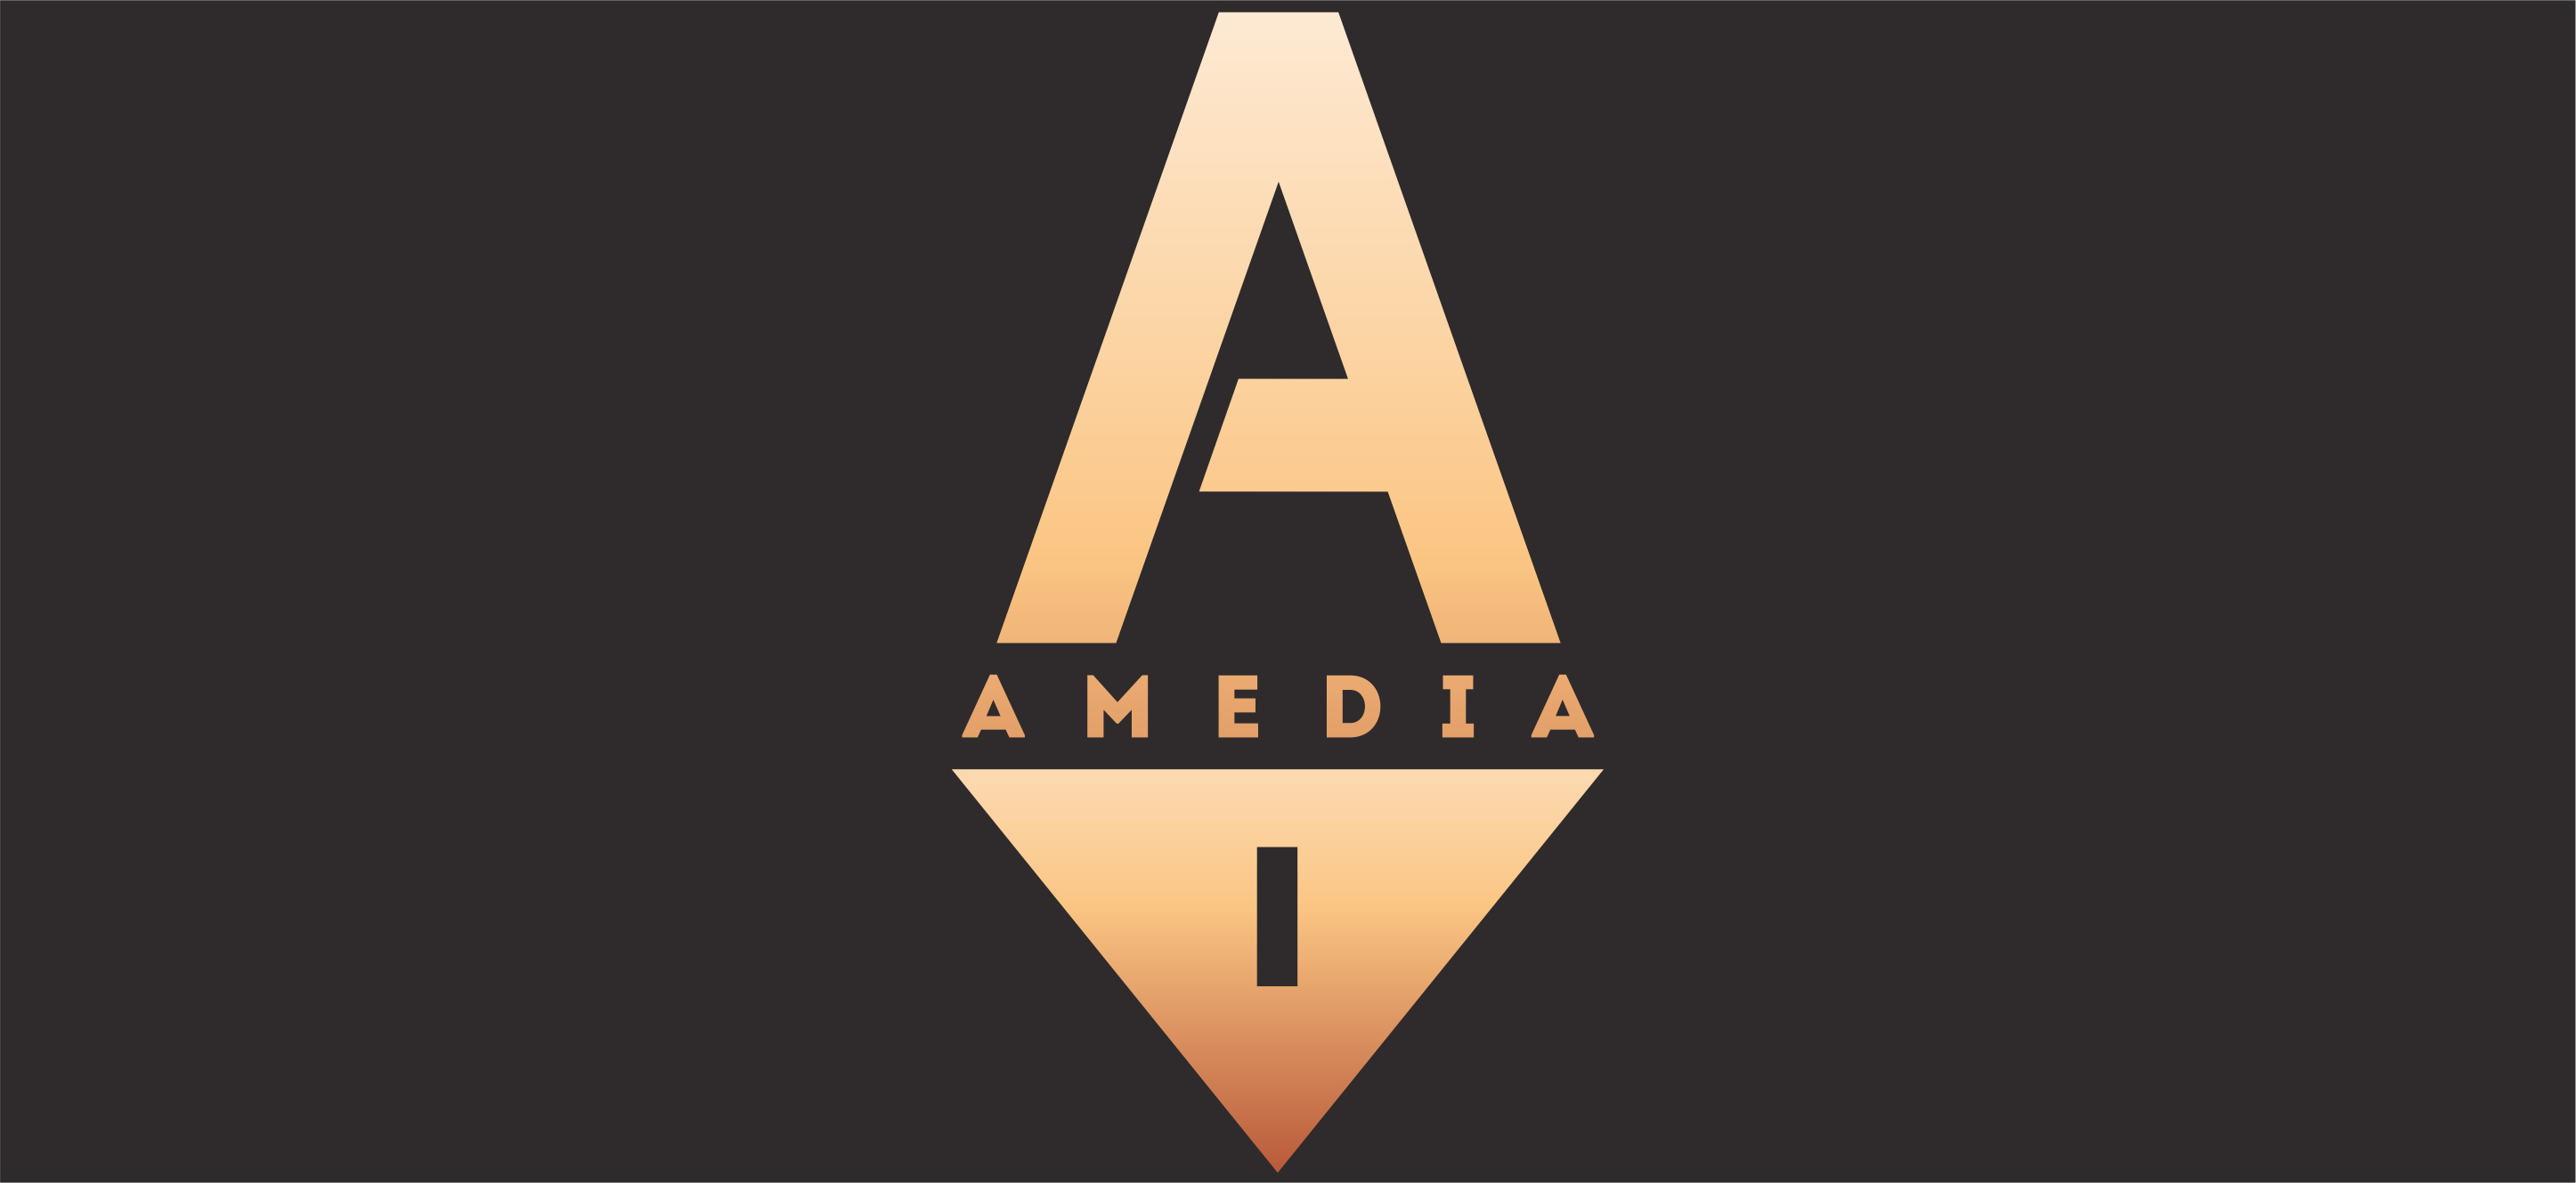 Amedia tv. Амедиа 1 Телеканал. Амедиа логотип. Киностудия Амедиа. Амедиа продакшн логотип.